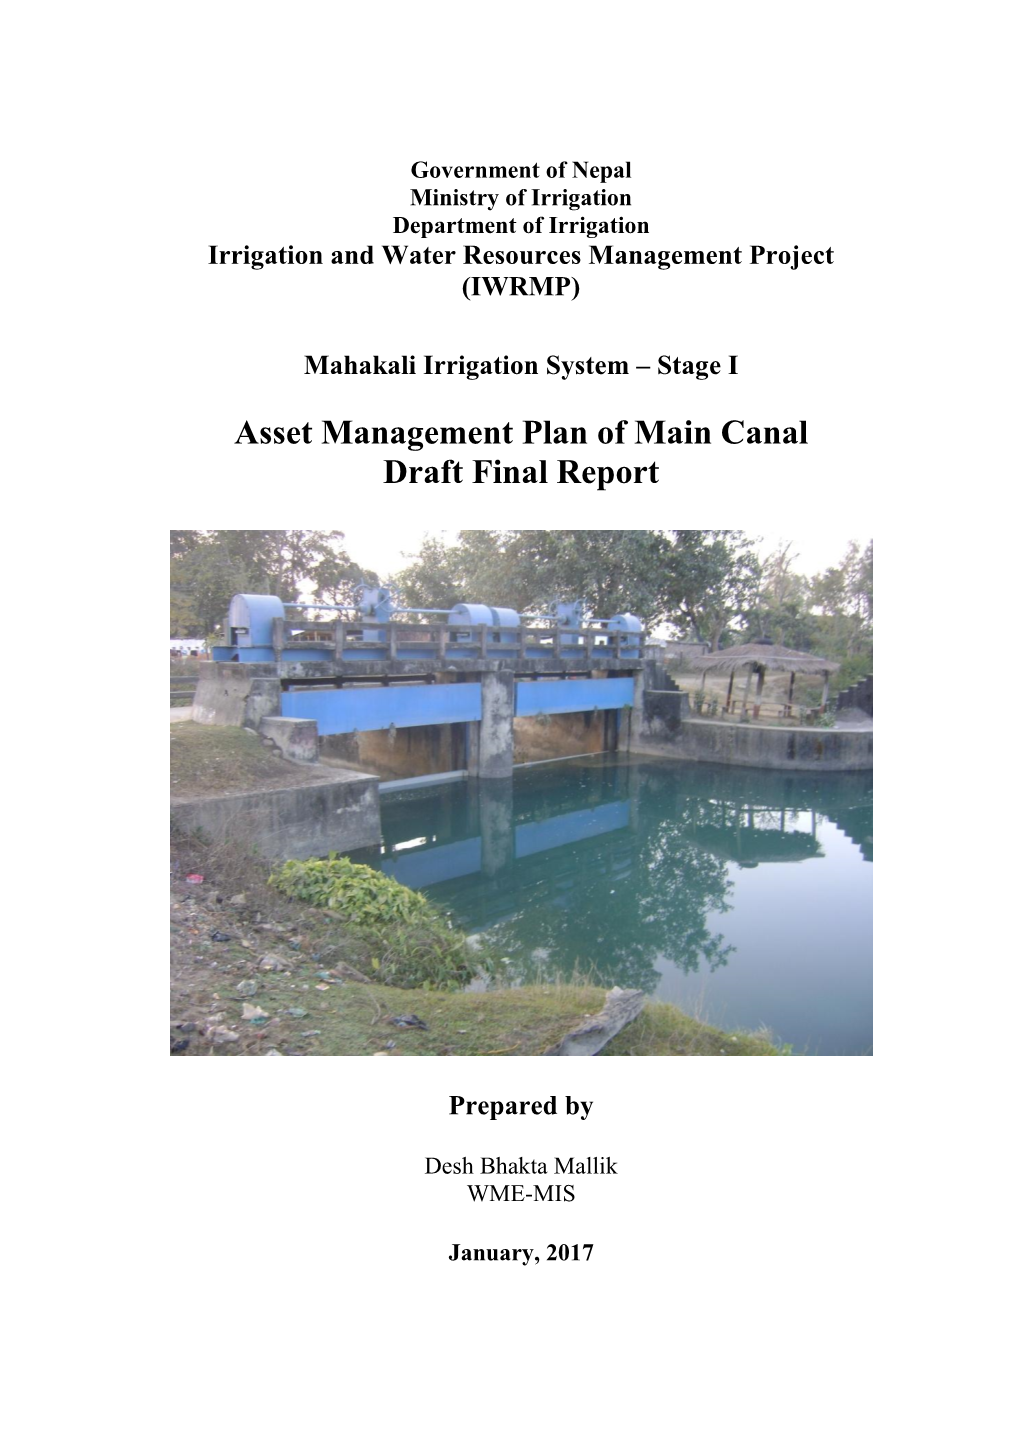 Main Canal Draft Final Report